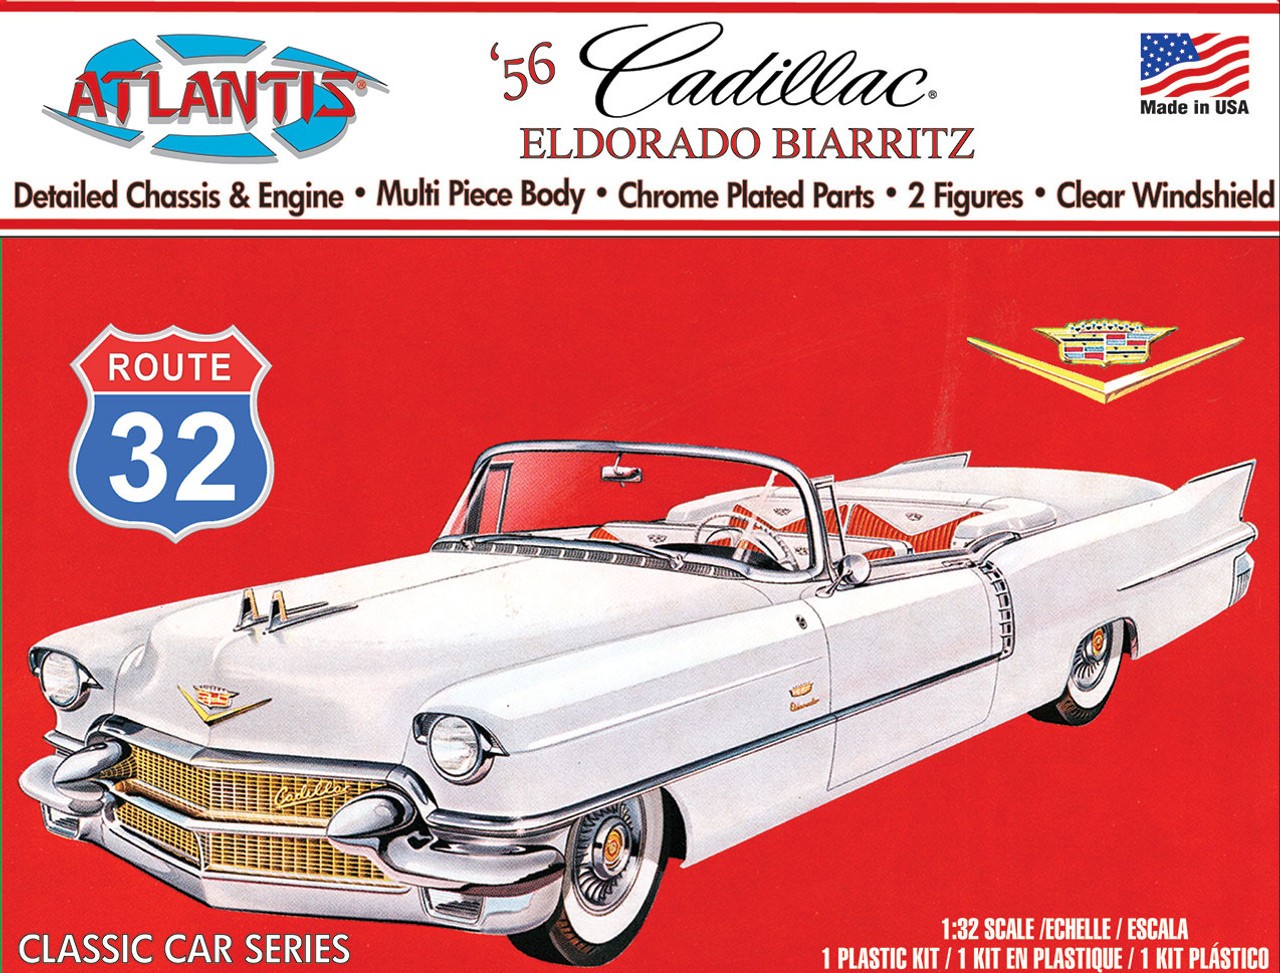 Atlantis H1200 Cadillac Eldorado Biarritz 1956 1/32